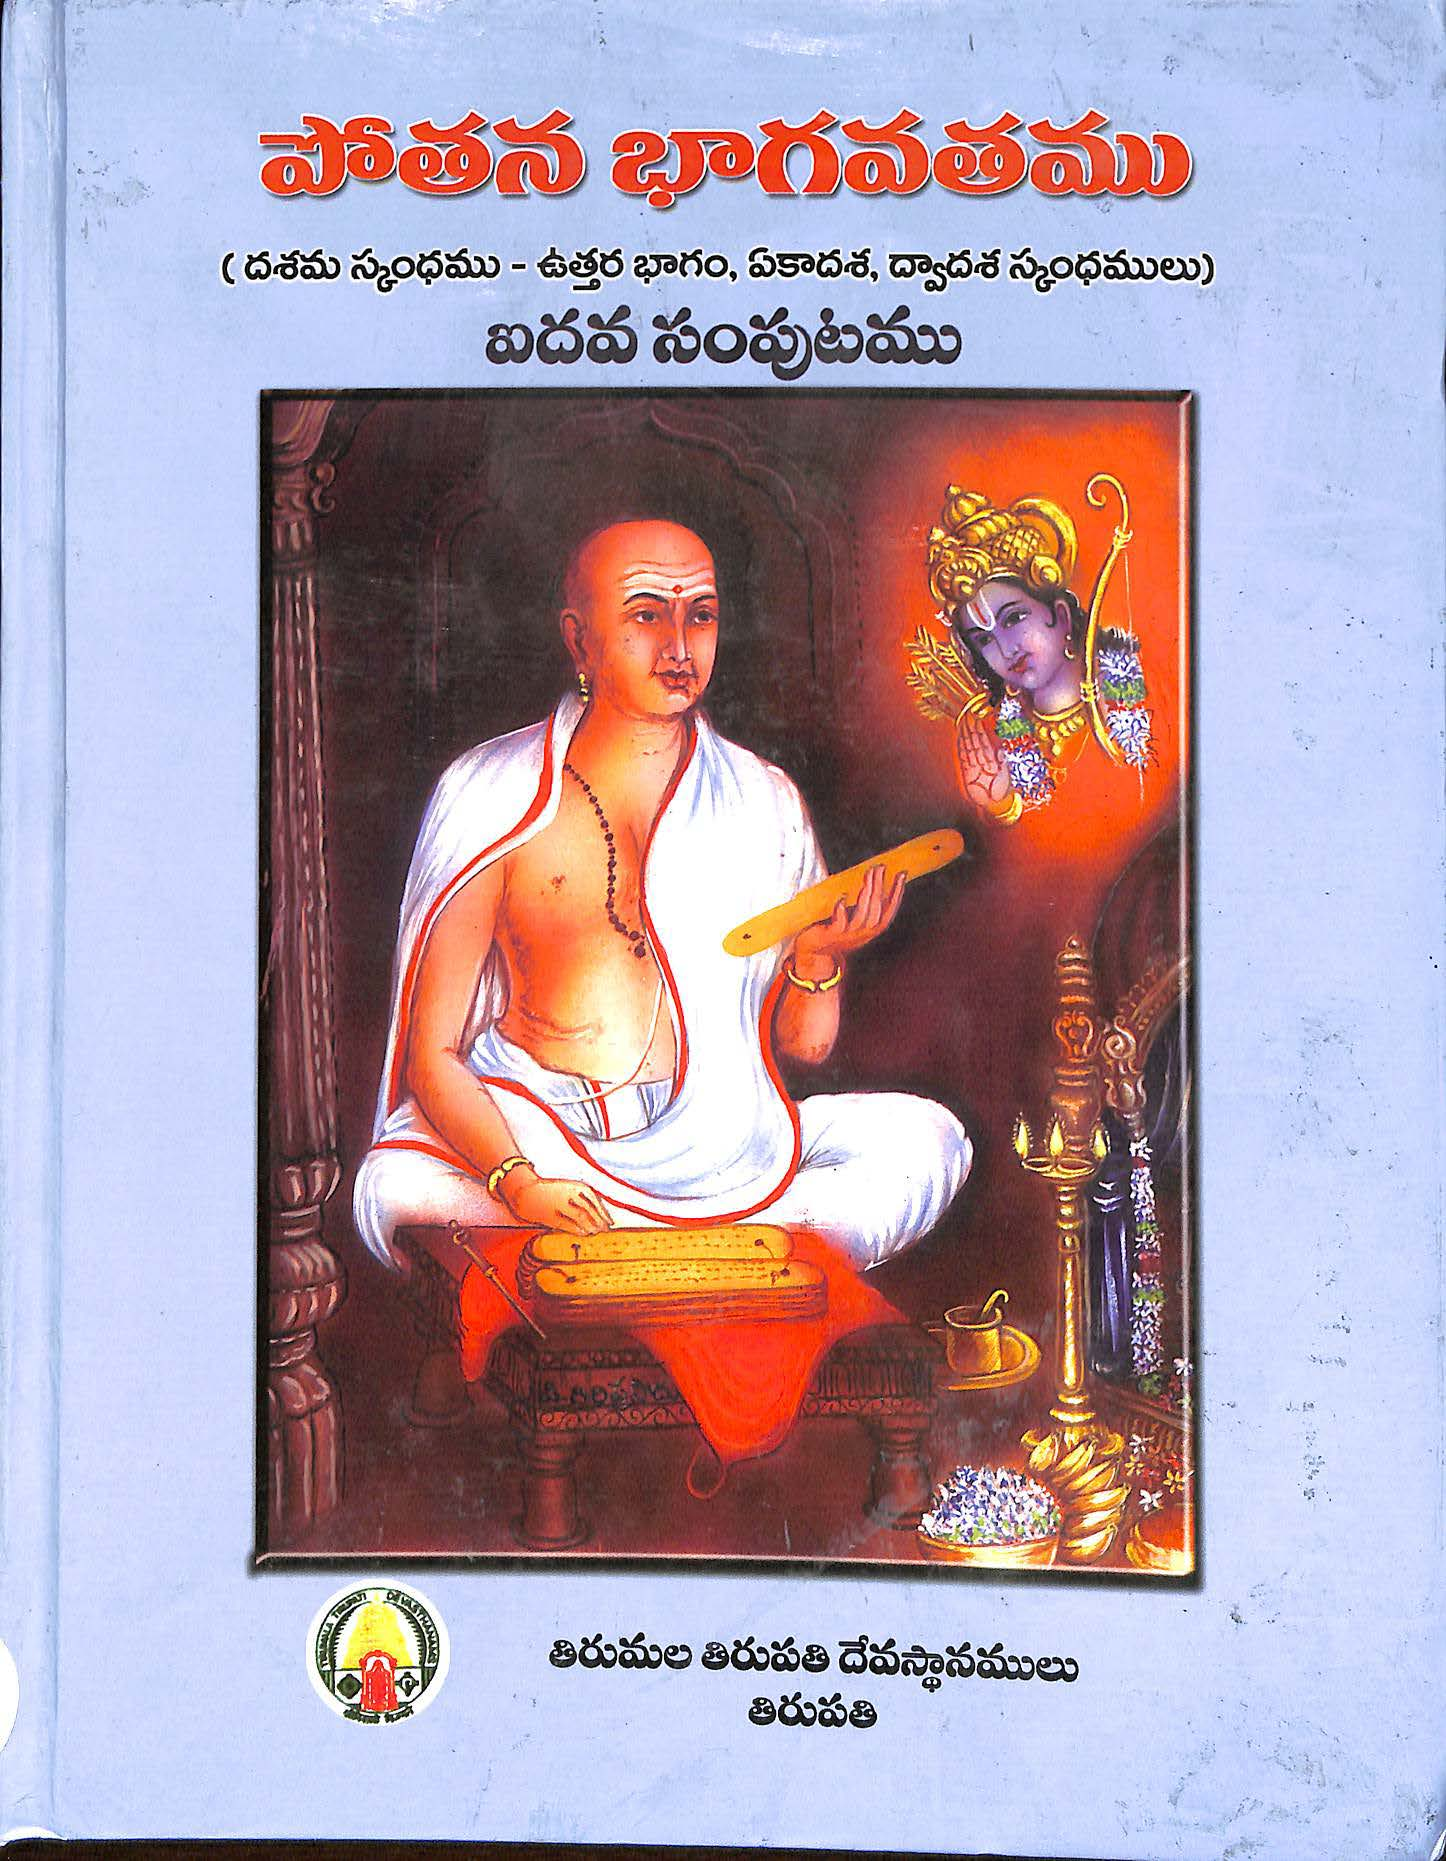 Pothana Bhagavathamu - 5 ( 10 Saknadhamu - Uththara Bhagamu, Yekadasha, Dawadasha Sakndhamulu )